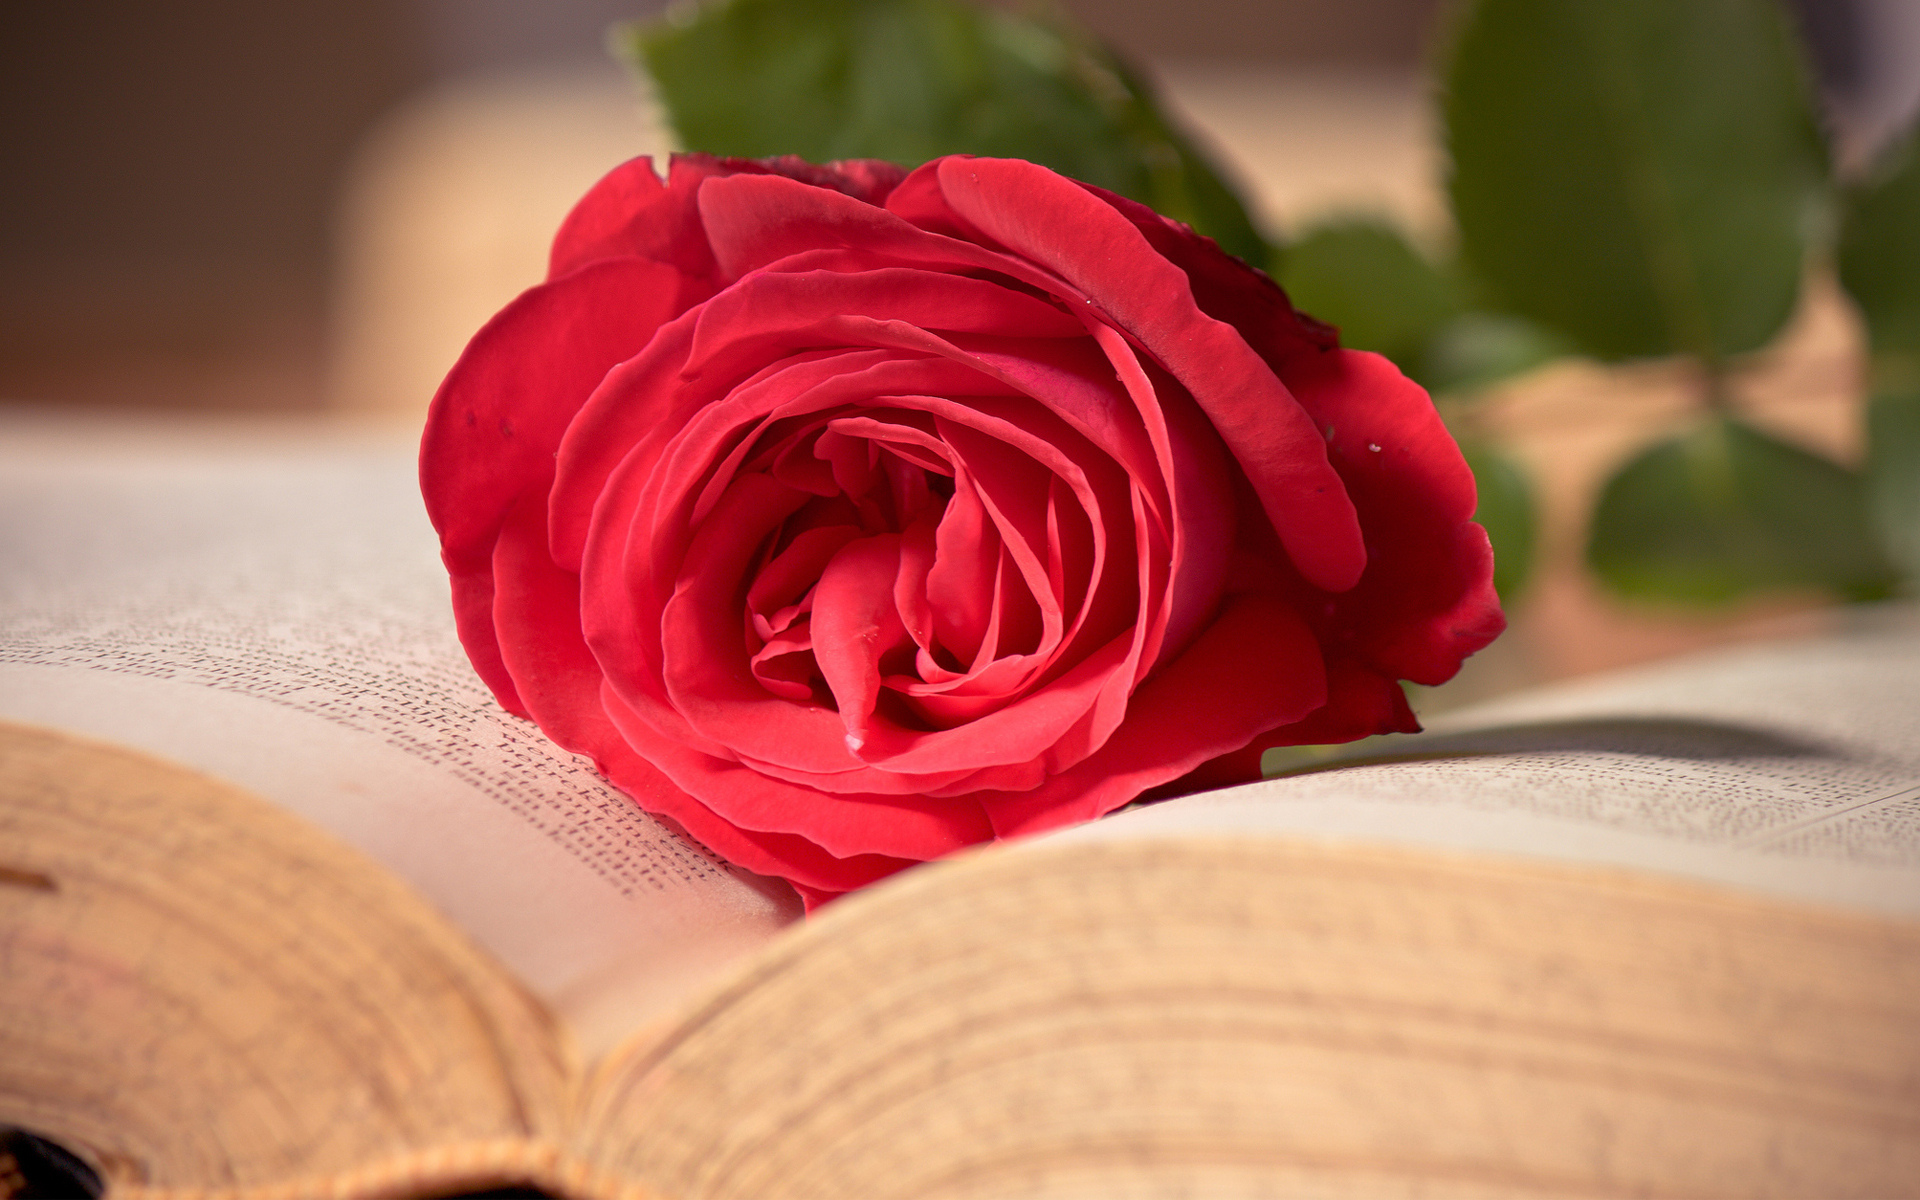 mood, flower, man made, book, love, romantic, rose